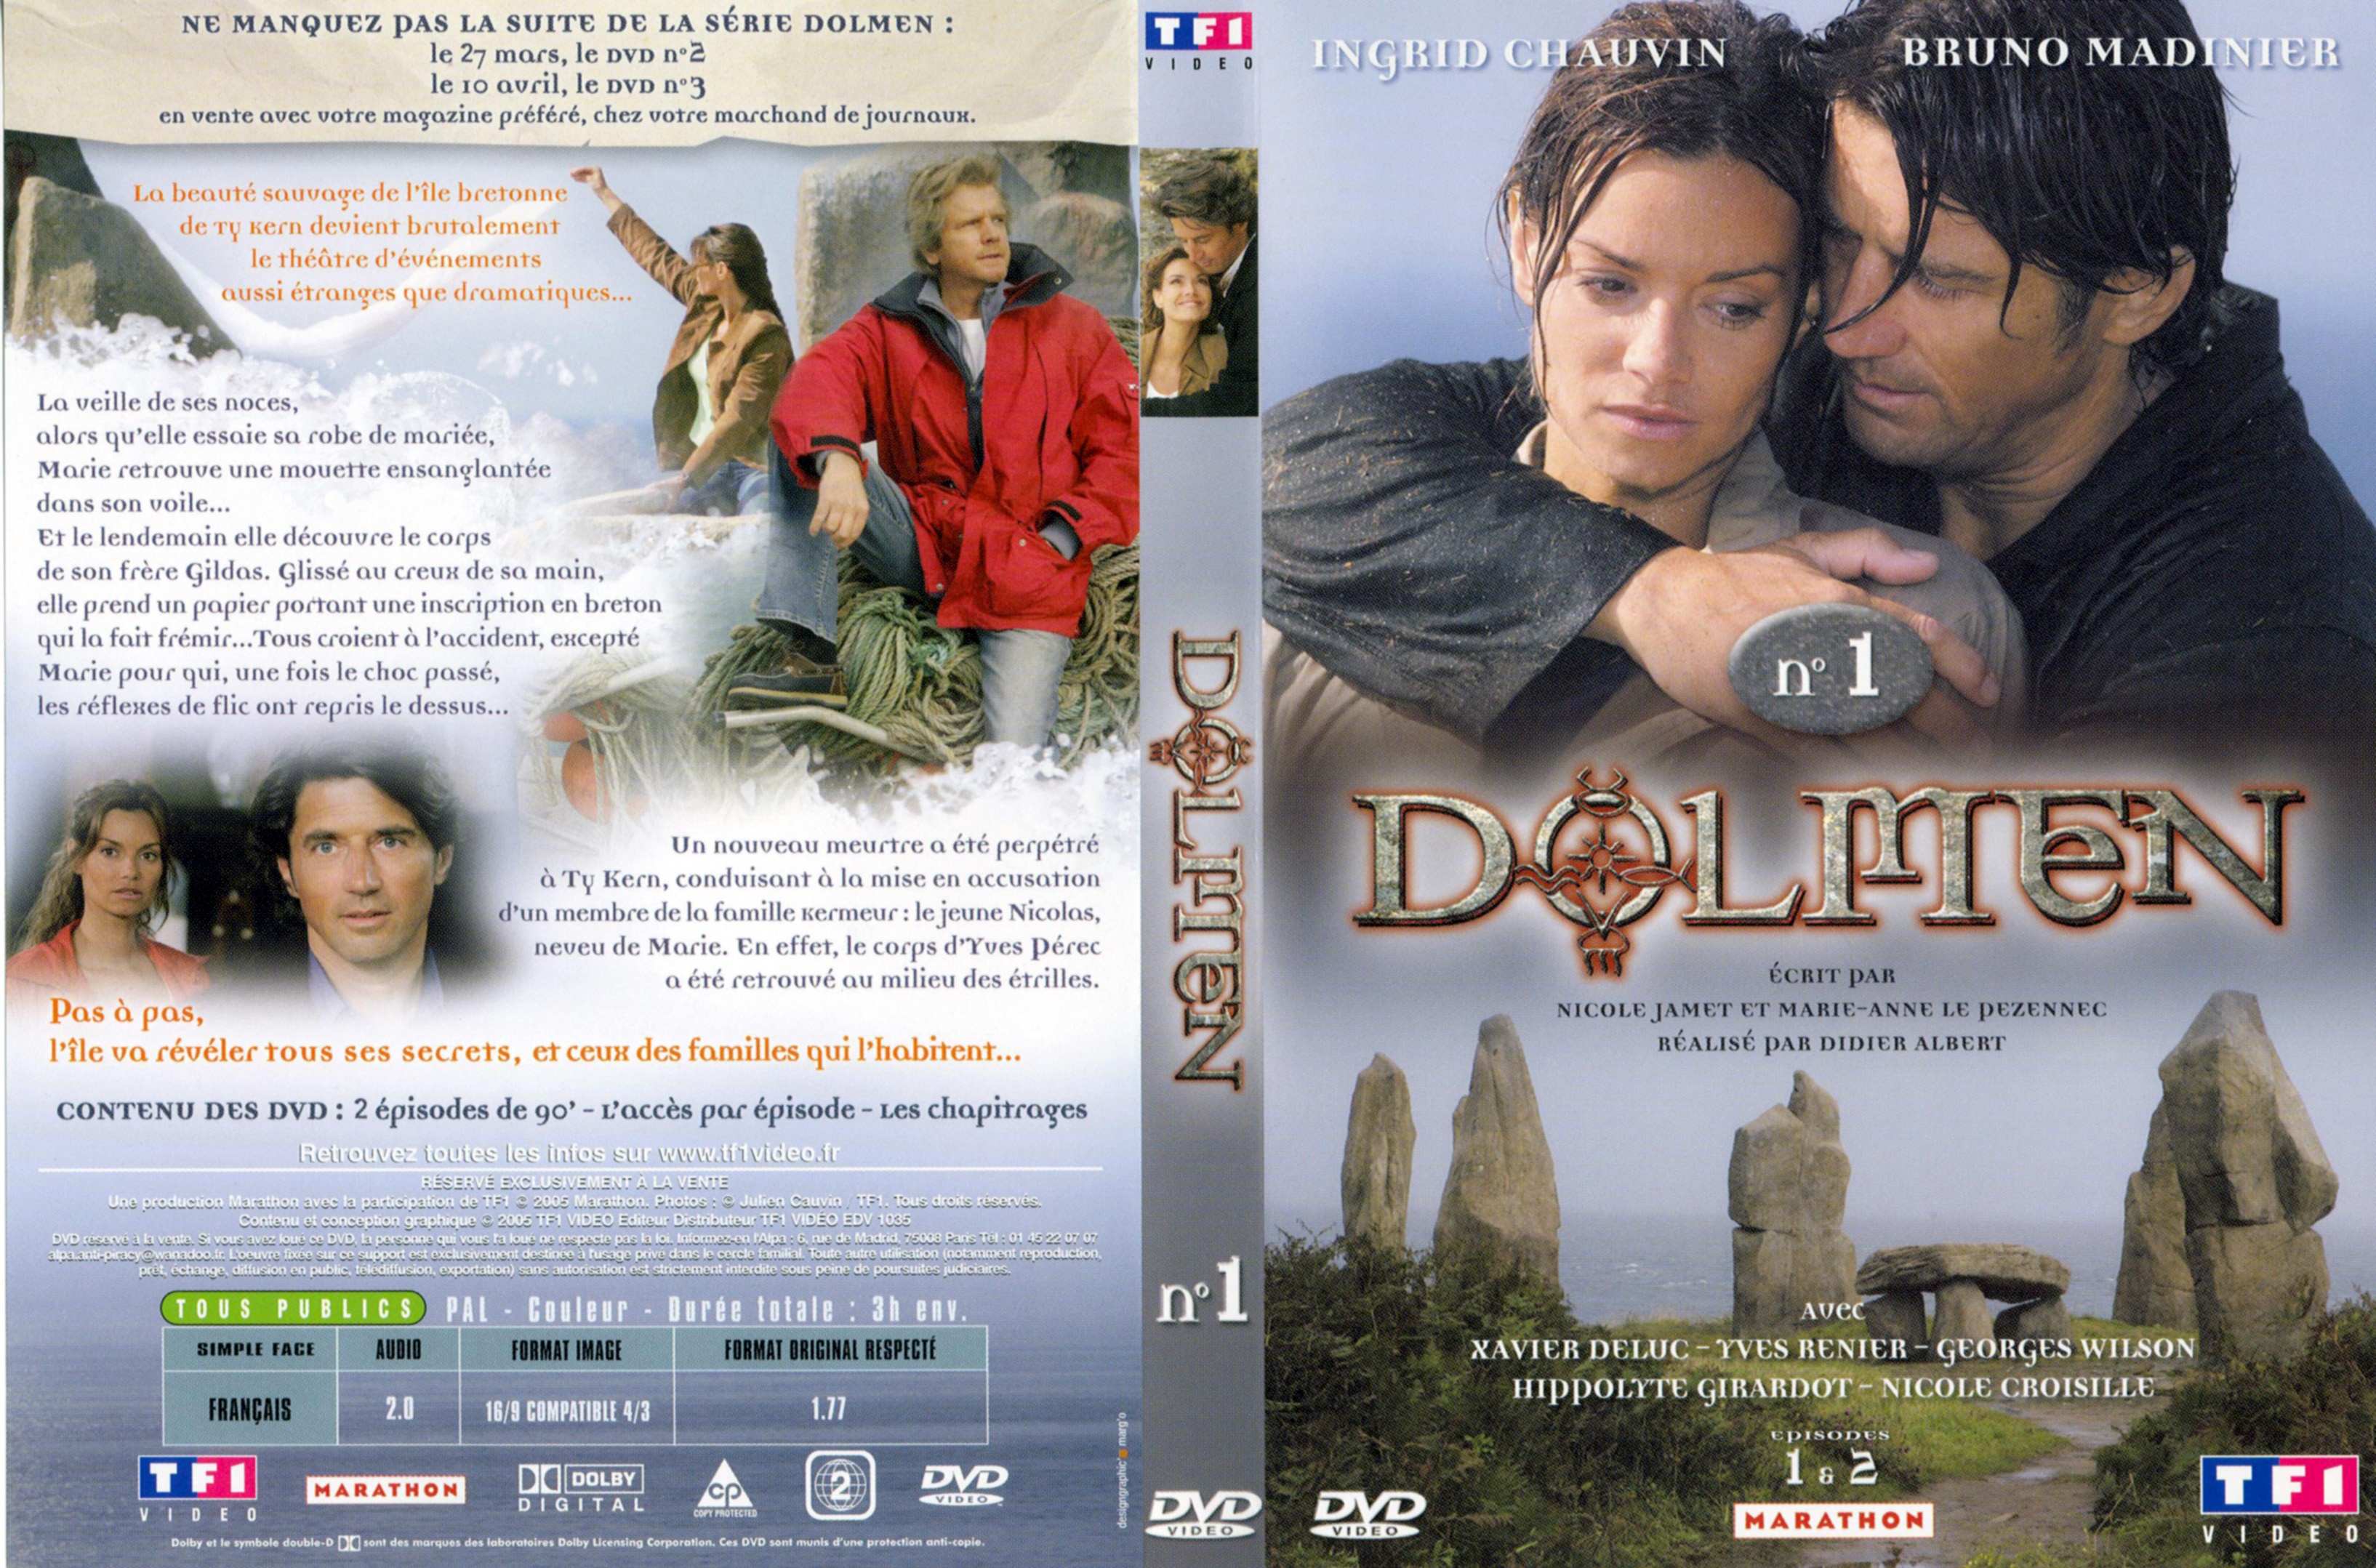 Jaquette DVD Dolmen vol 1